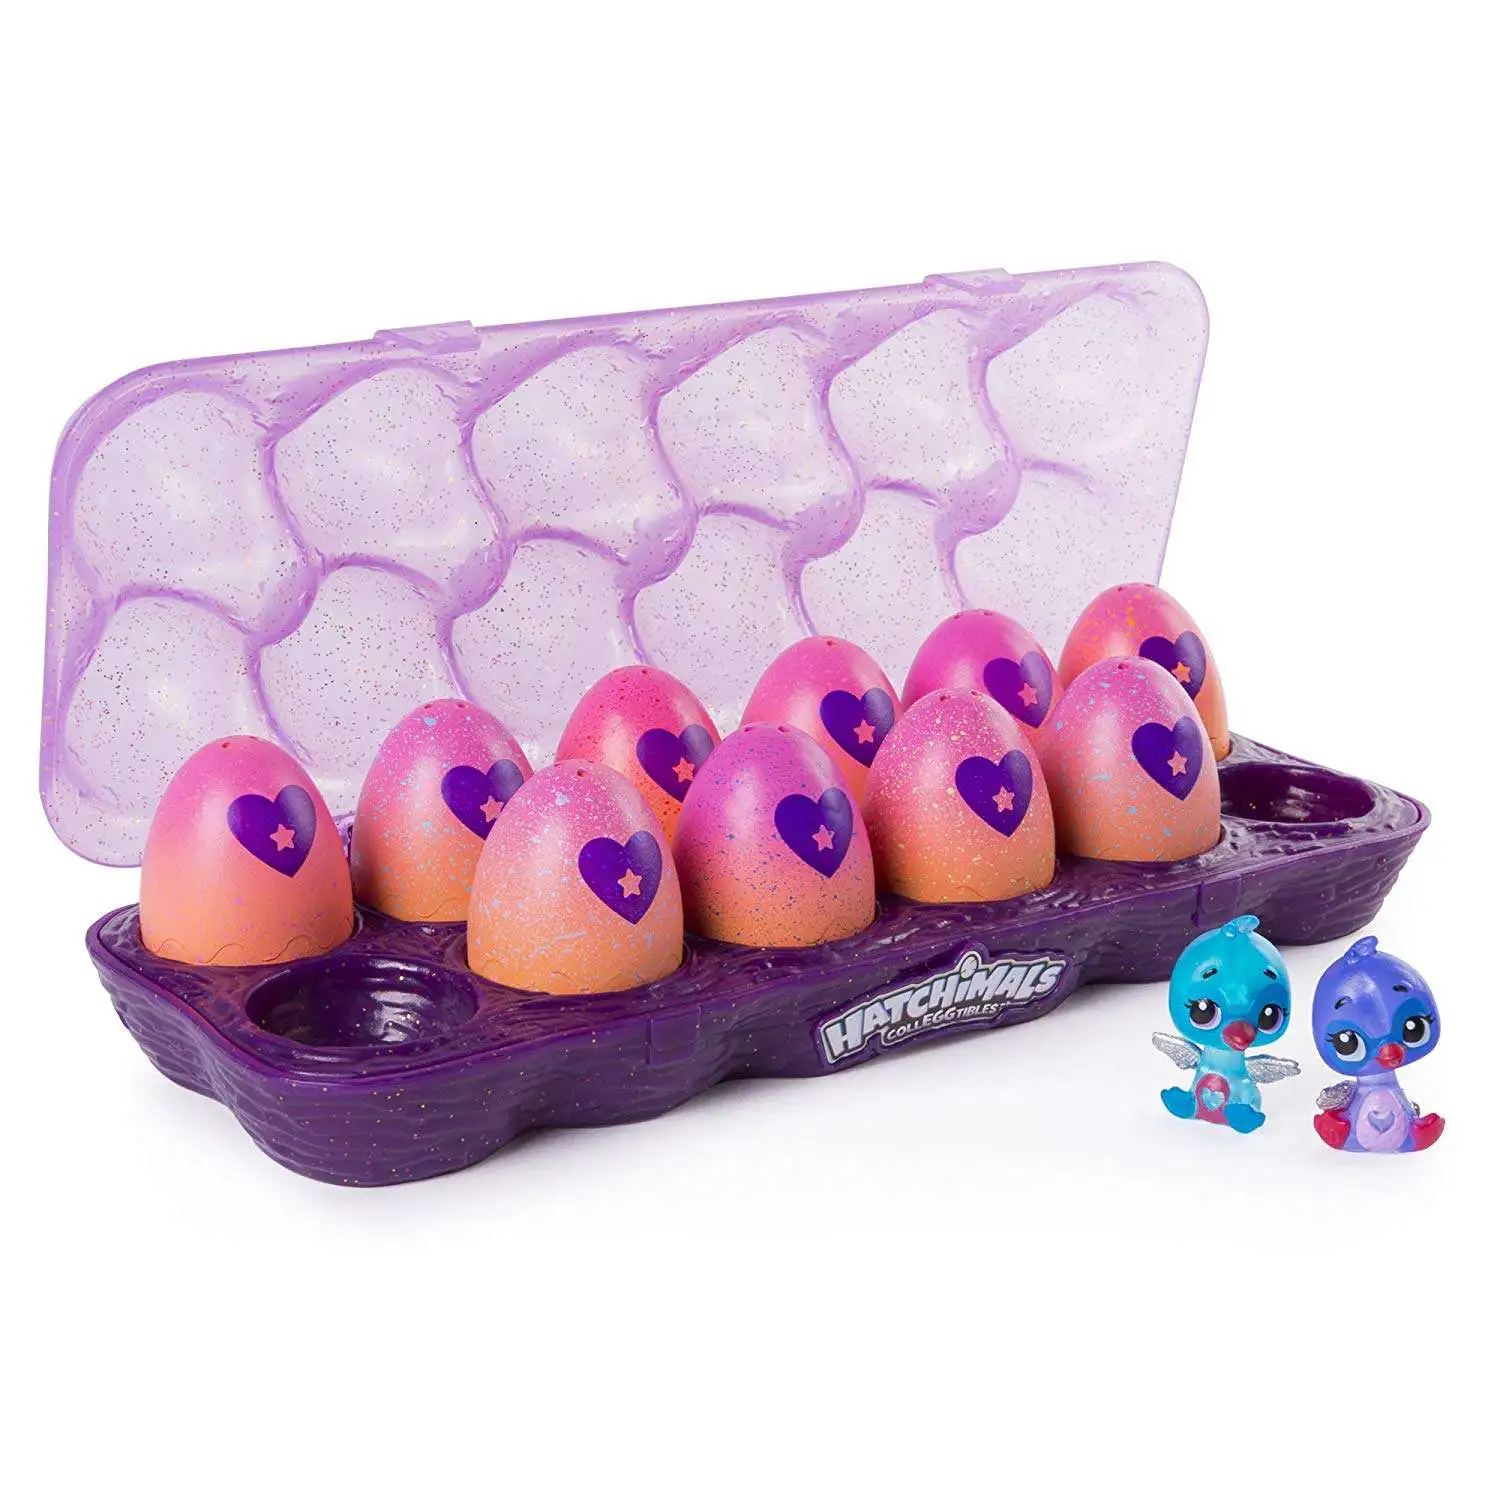 Hatchimals CollEGGtibles Neon Nightglow 12 Pack Egg Carton with Season 4 